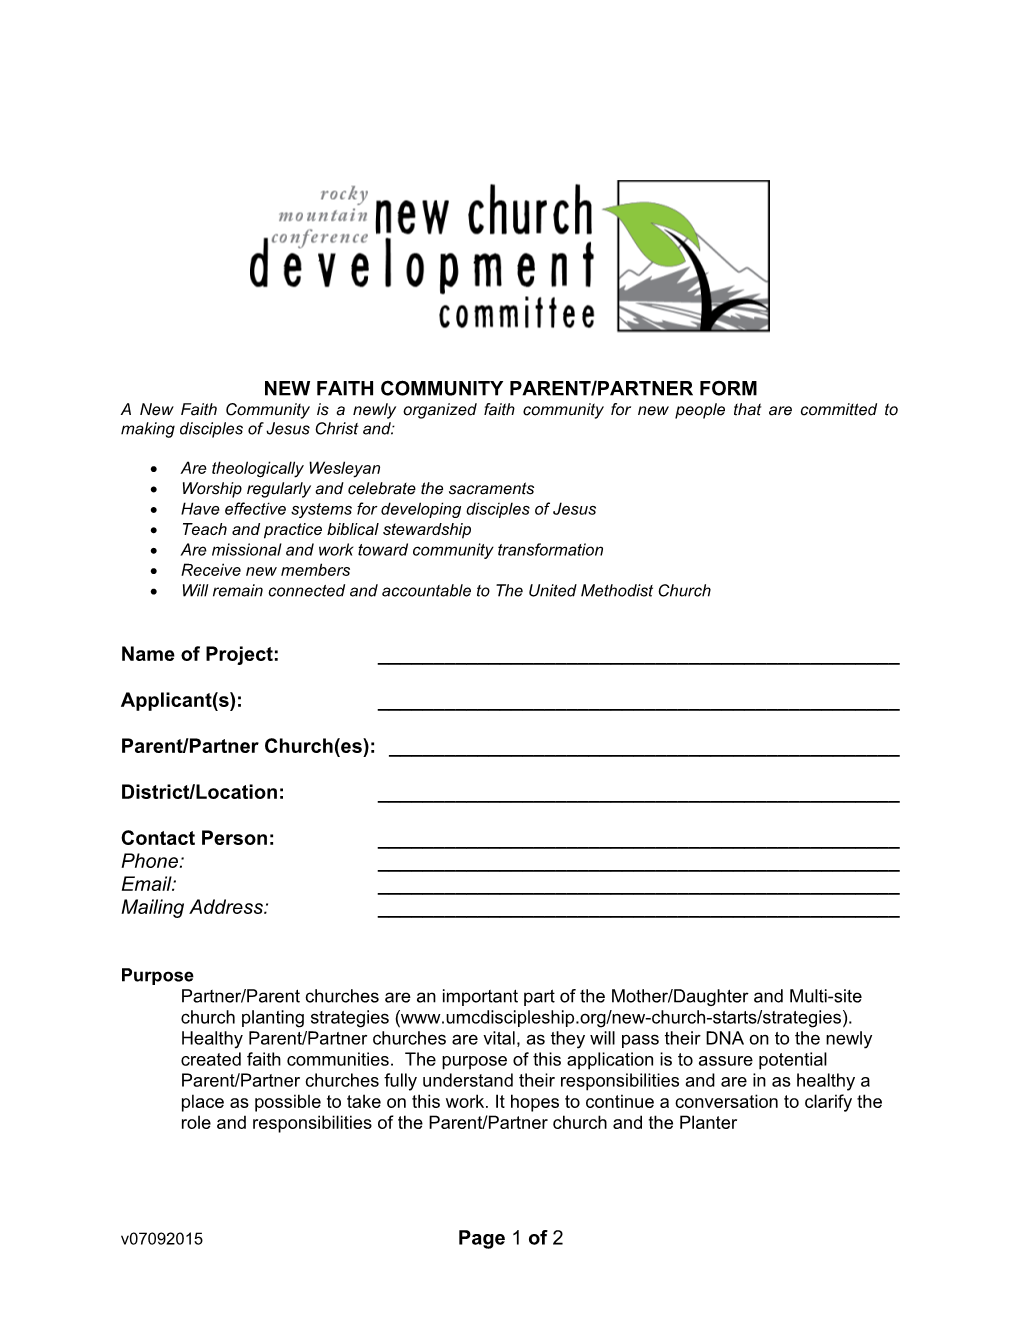 New Faith Communityparent/Partner Form